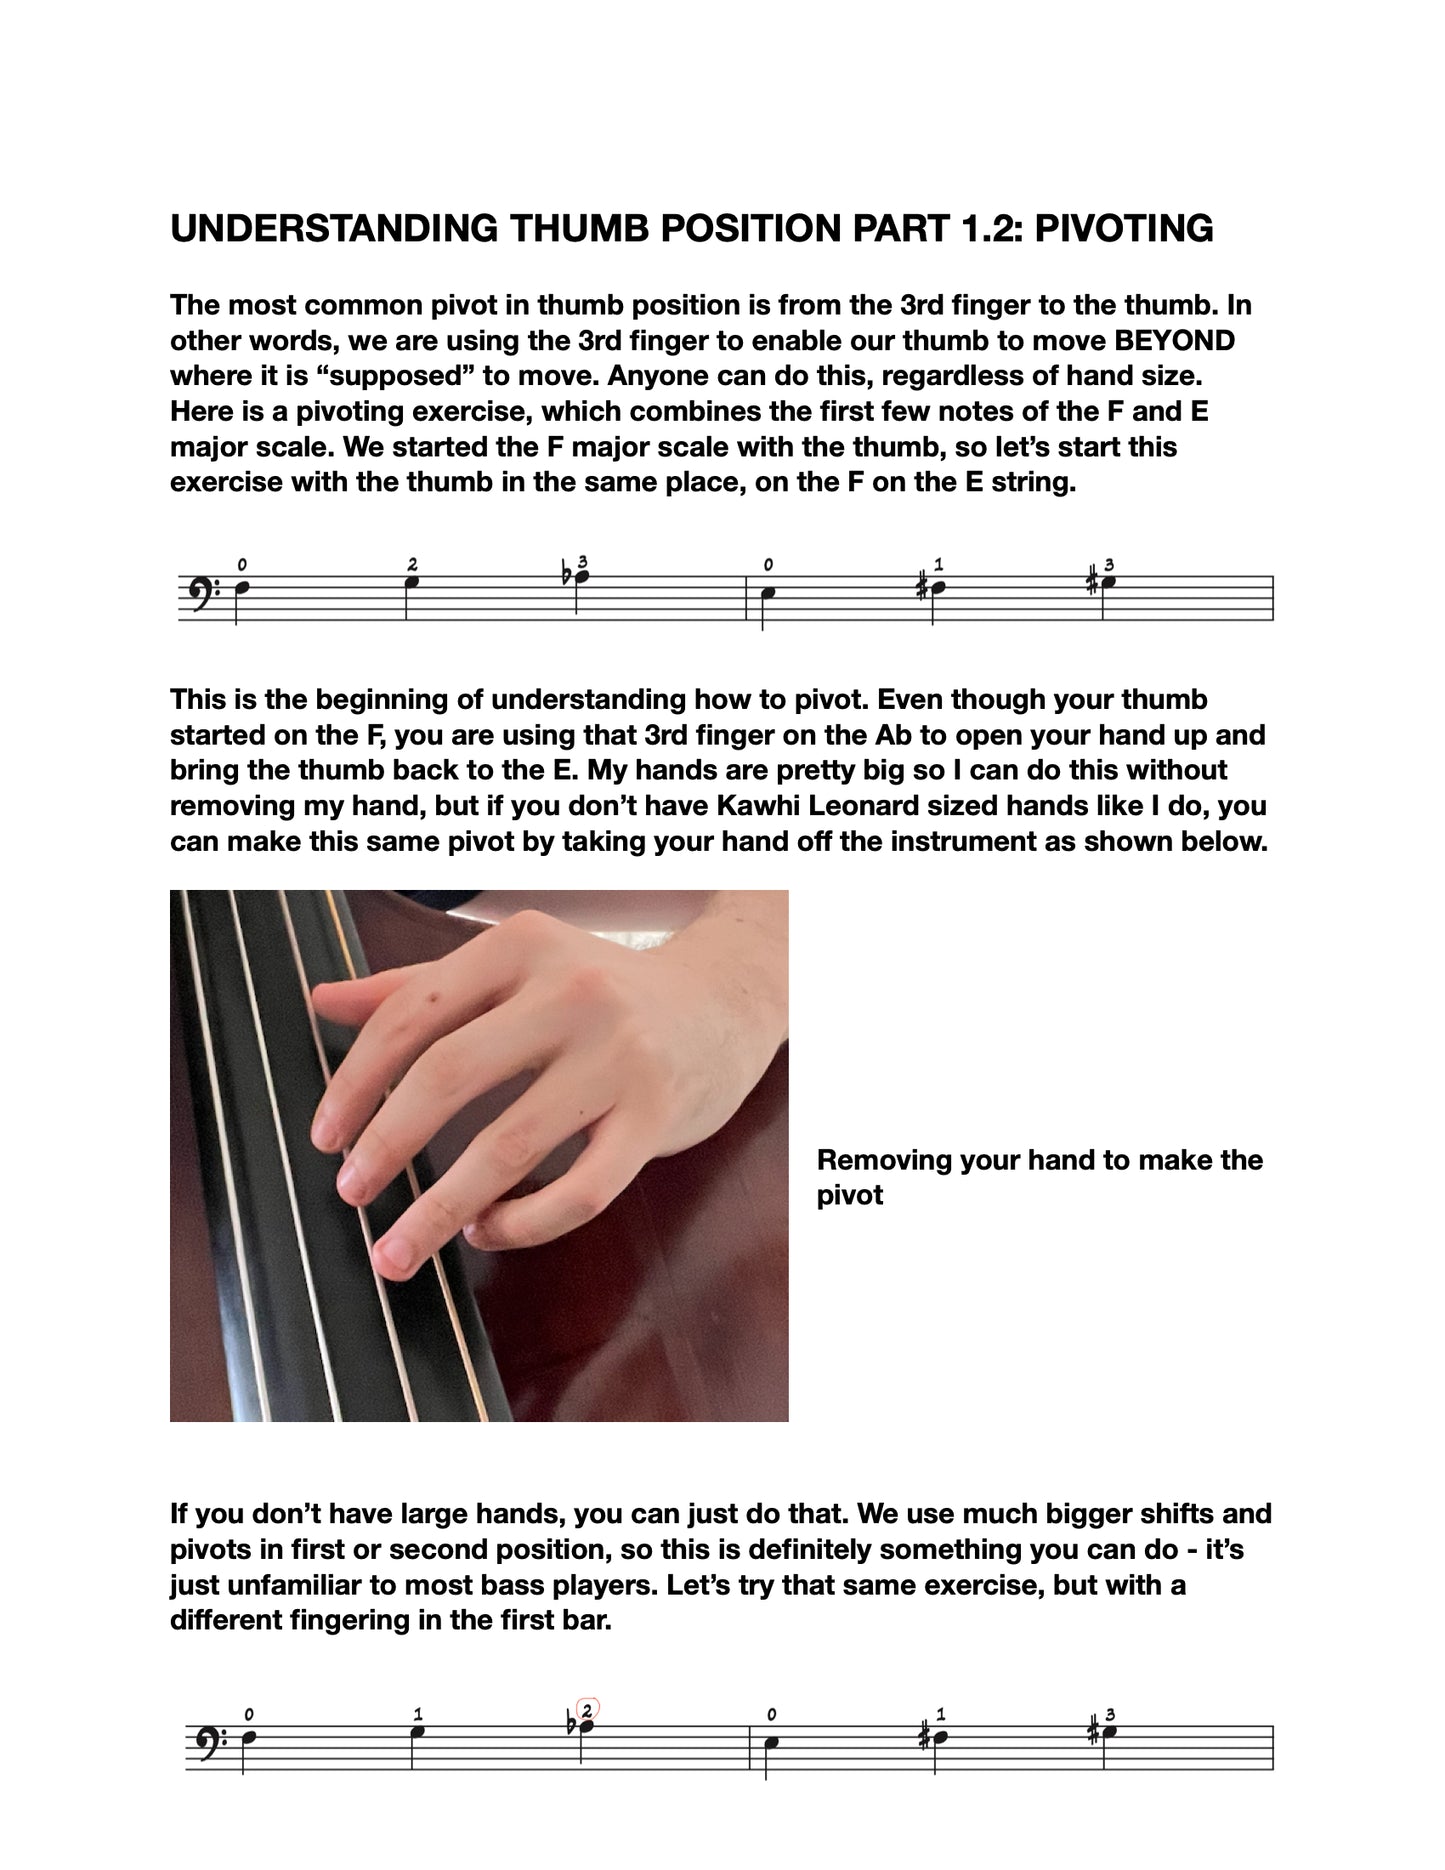 Cole Davis: Understanding Thumb Position